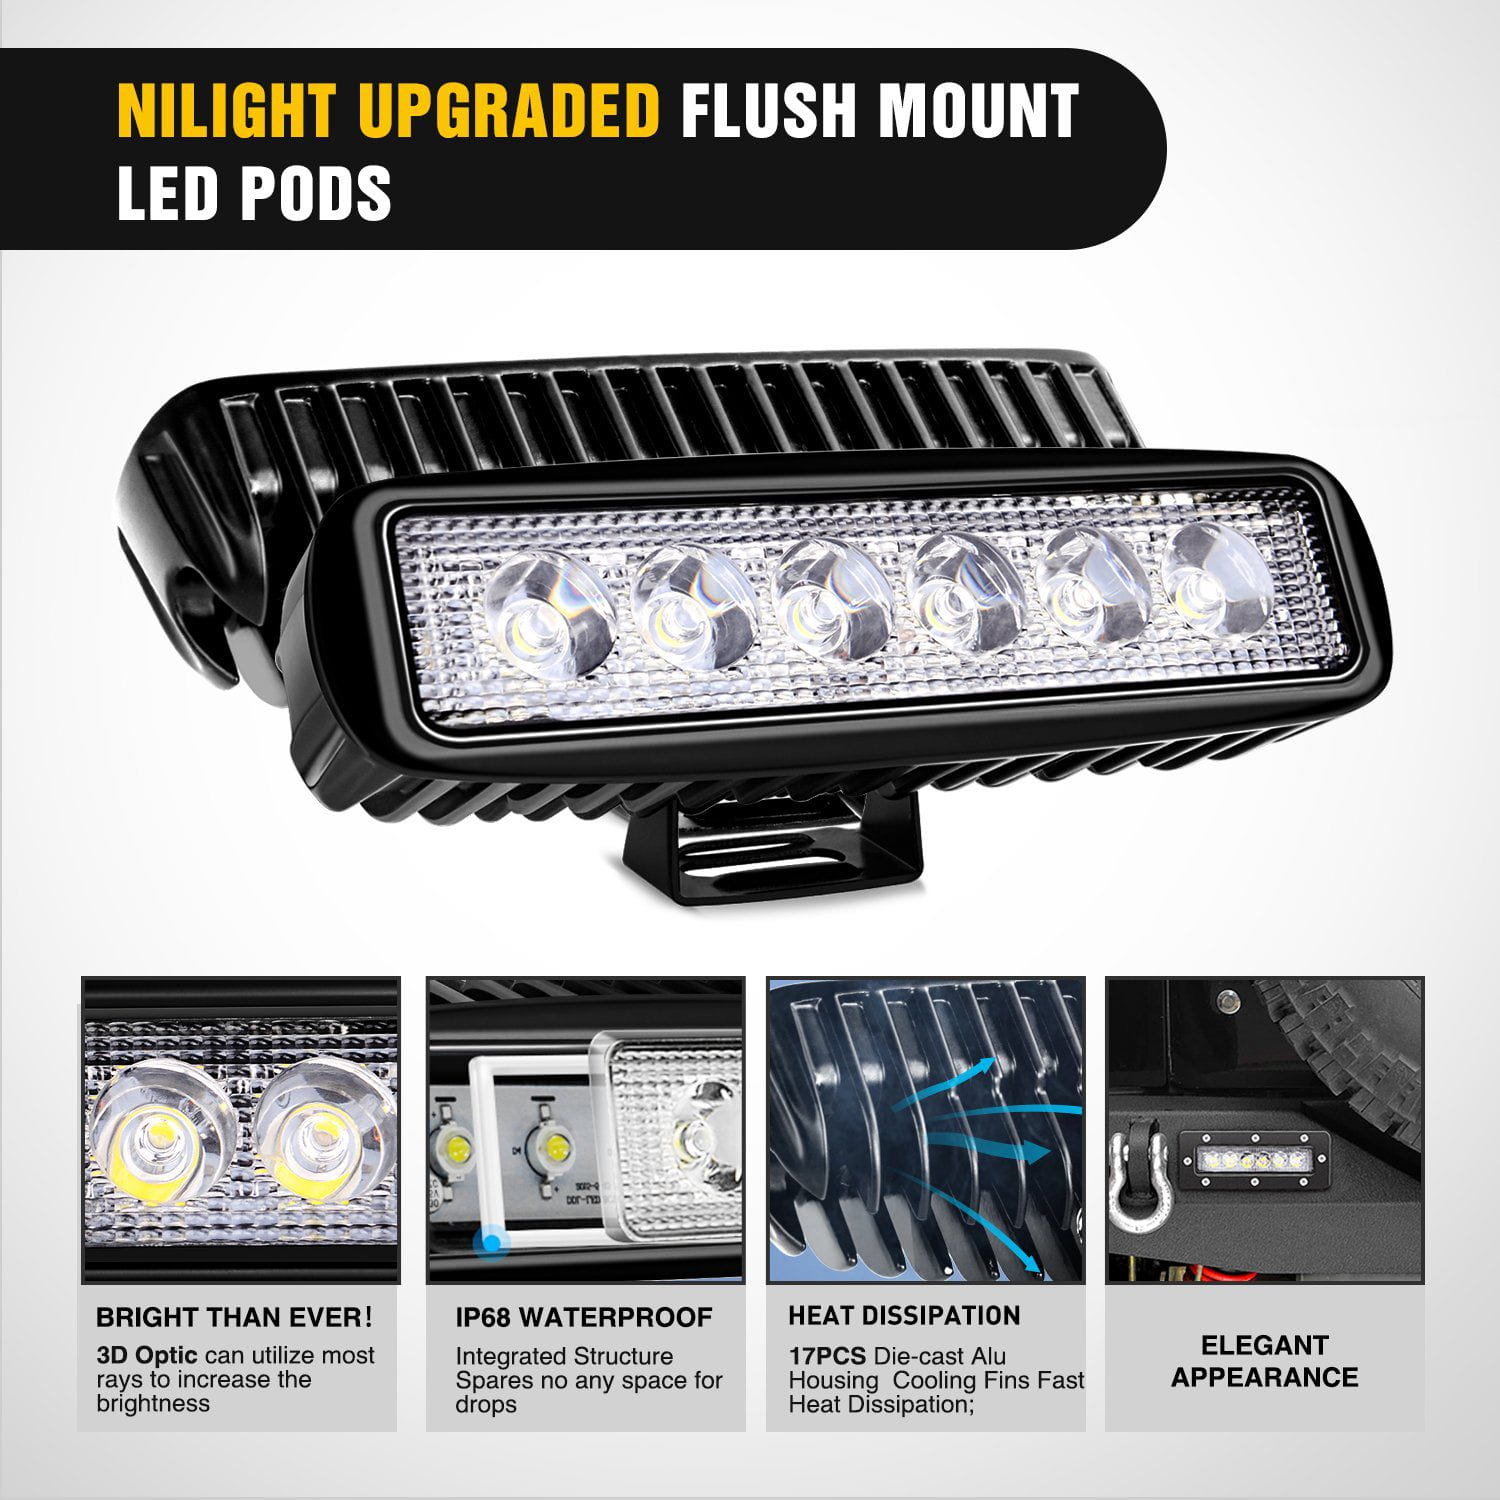 LED Pods of Nilight Rear Bumper Kit for 1987-2006 Jeep Wrangler TJ & YJ